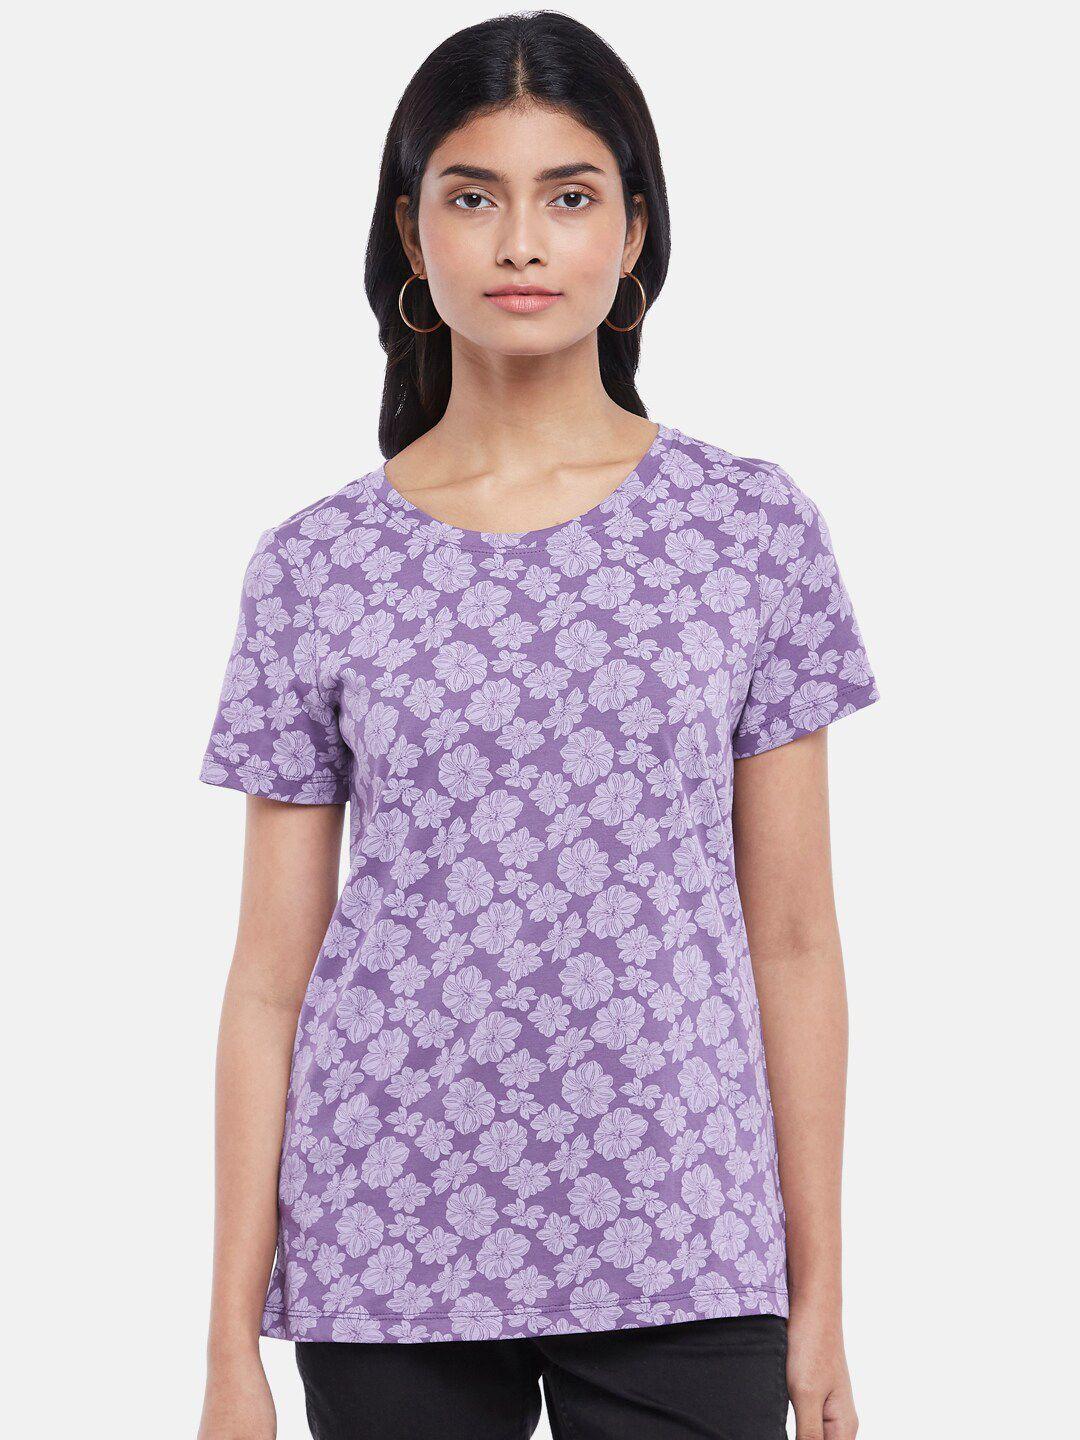 honey by pantaloons women lavender floral printed cotton t-shirt